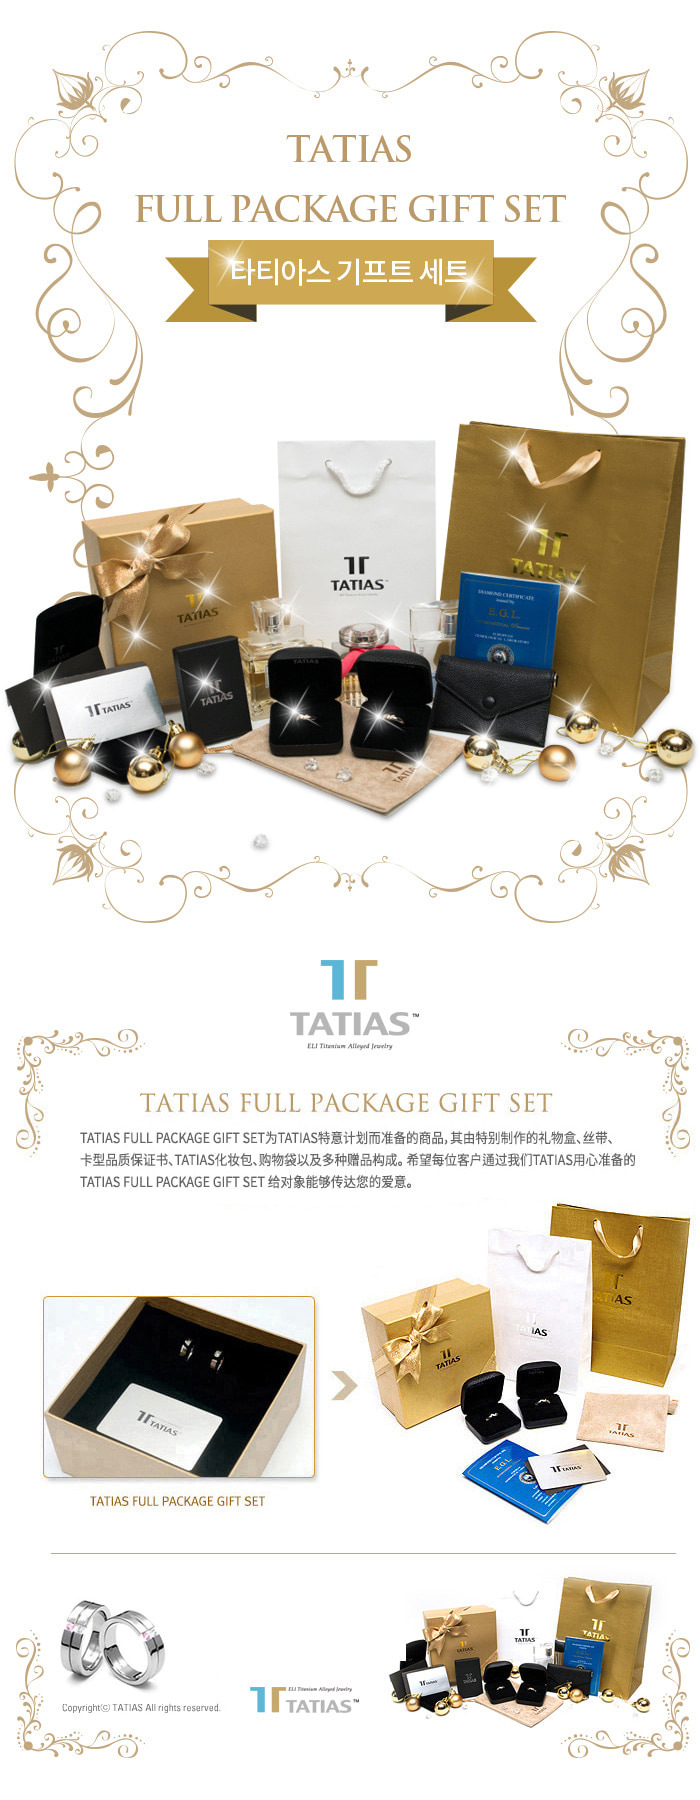 TATIAS FULL PACKAGE GIFT SET为TATIAS特意计划而准备的商品，其由特别制作的礼物盒、丝带、卡型品质保证书、TATIAS化妆包、购物袋以及多种赠品构成。希望每位客户通过我们TATIAS用心准备的 FULL PACKAGE GIFT SET给对象能够传达您的爱意。